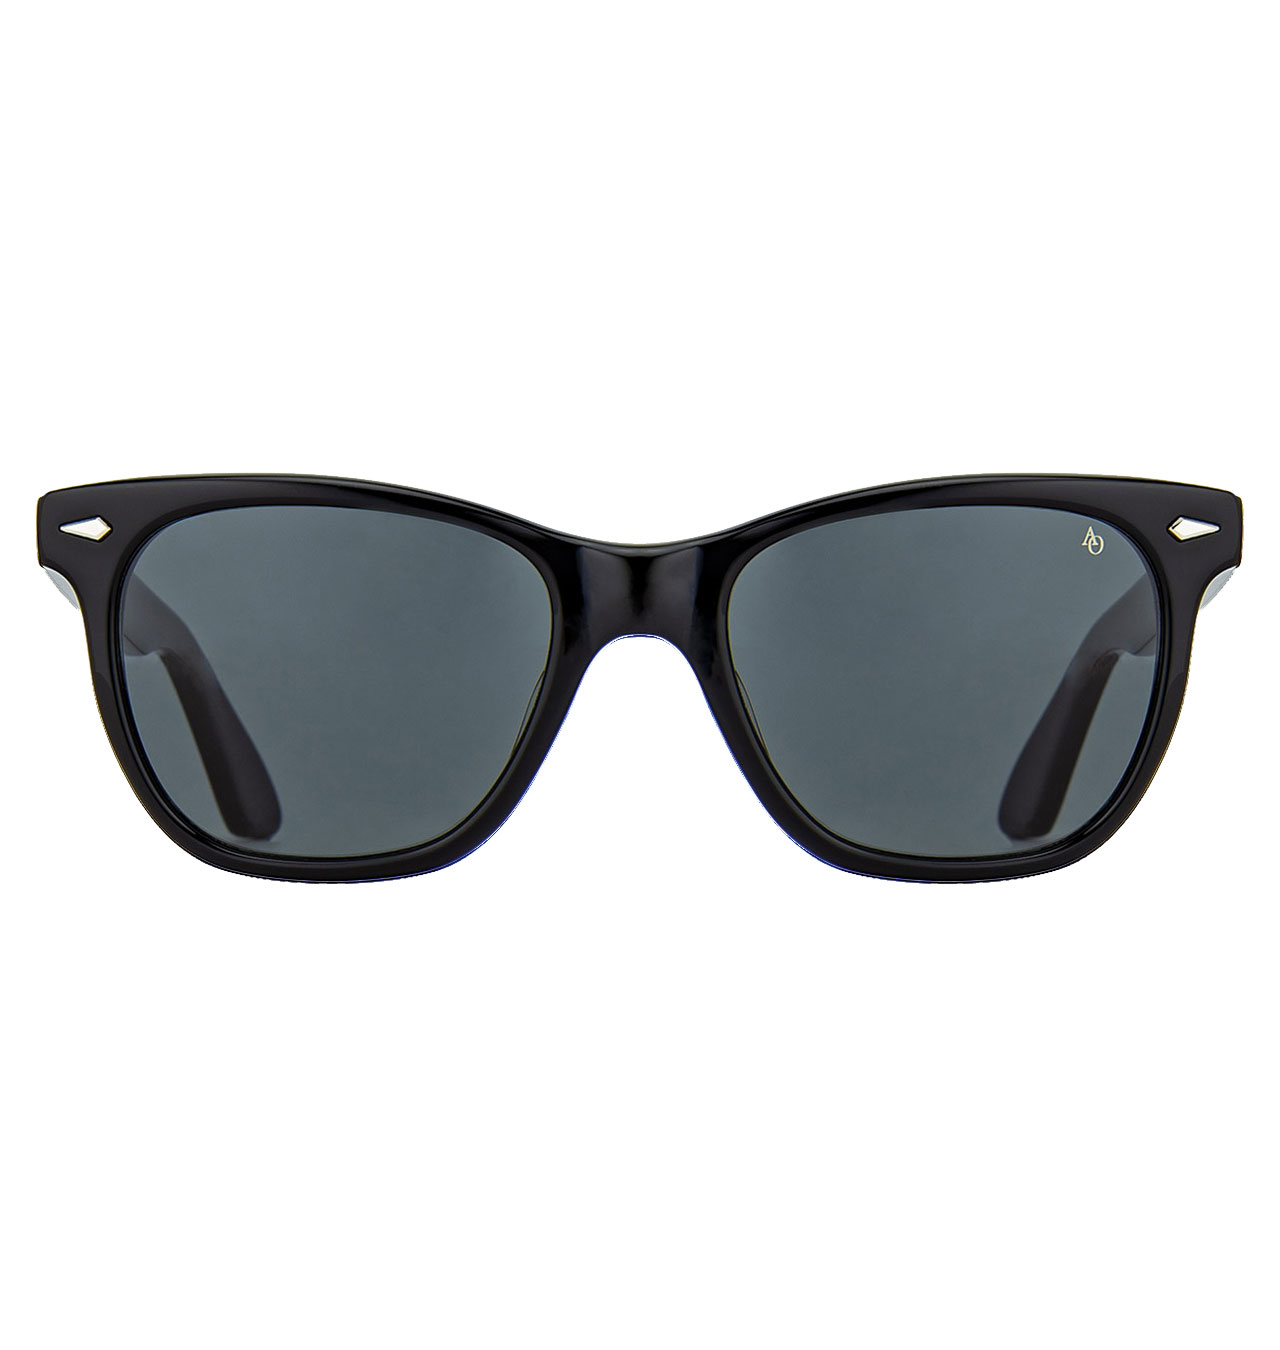 American-Optical---Saratoga-Sunglasses-Black-1